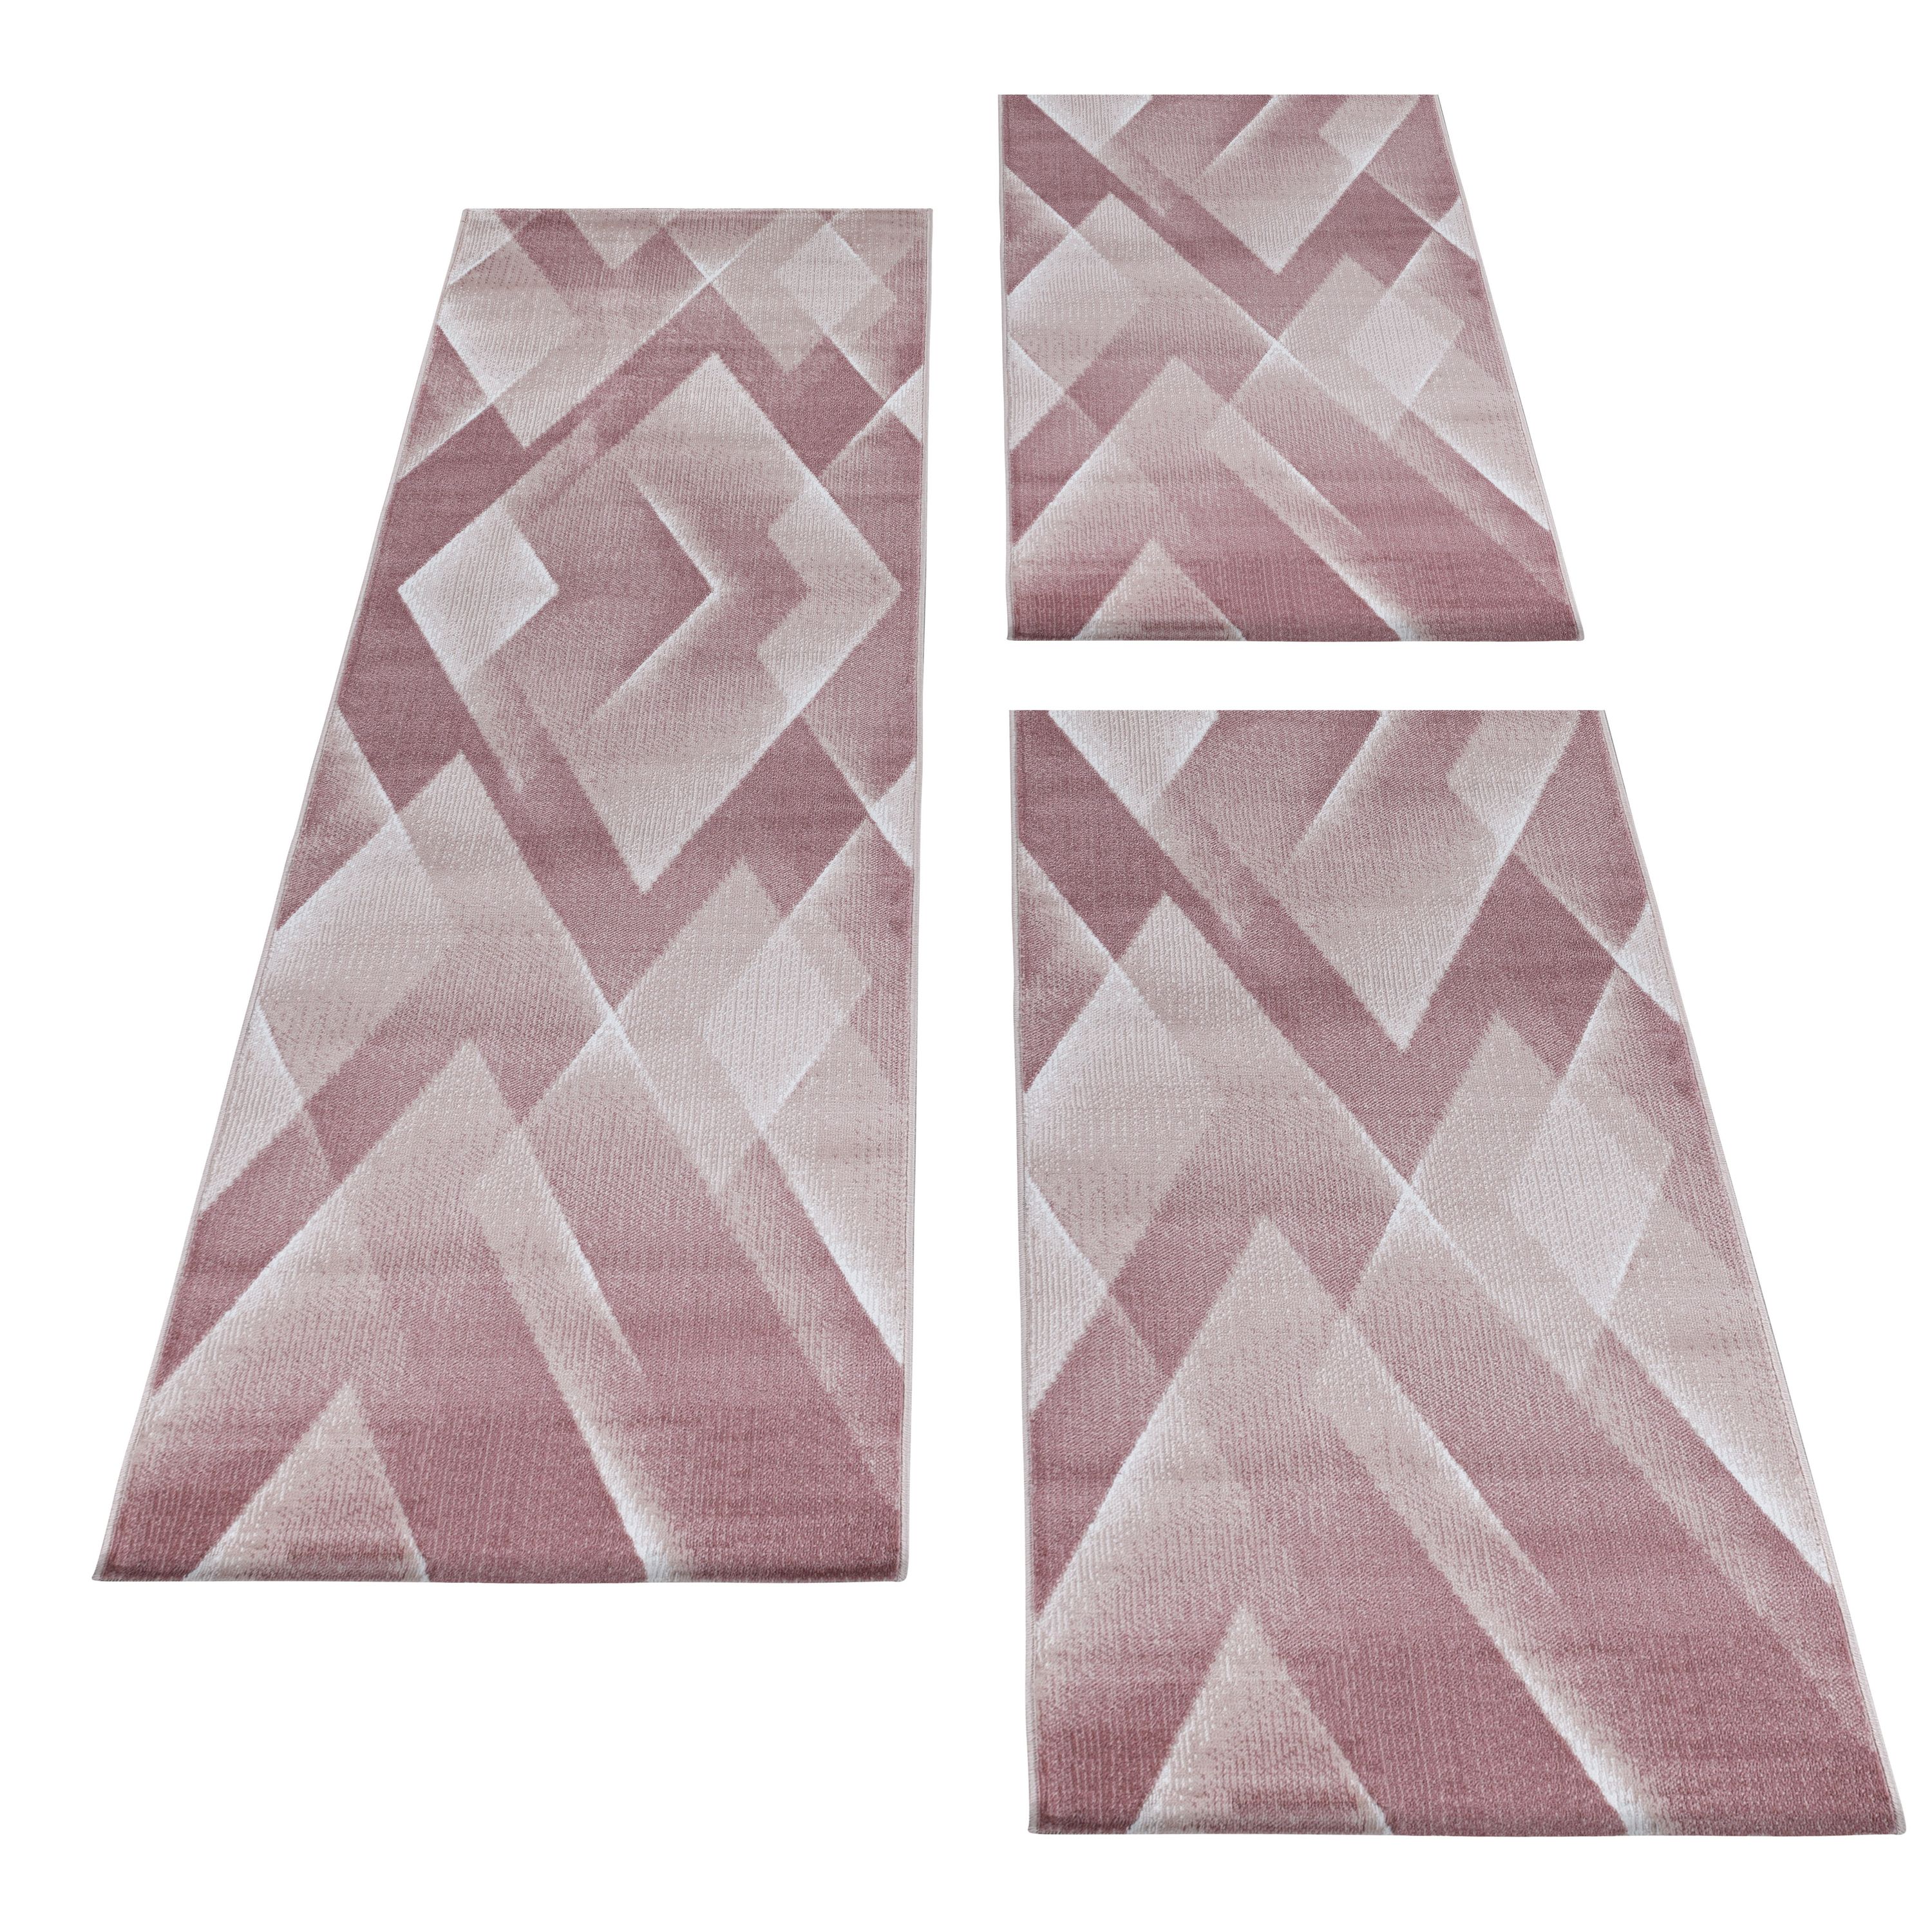 Kurzflor Teppich Set Schlafzimmer Läufer Set 3-D Muster Dreieck 3 Teile Pink